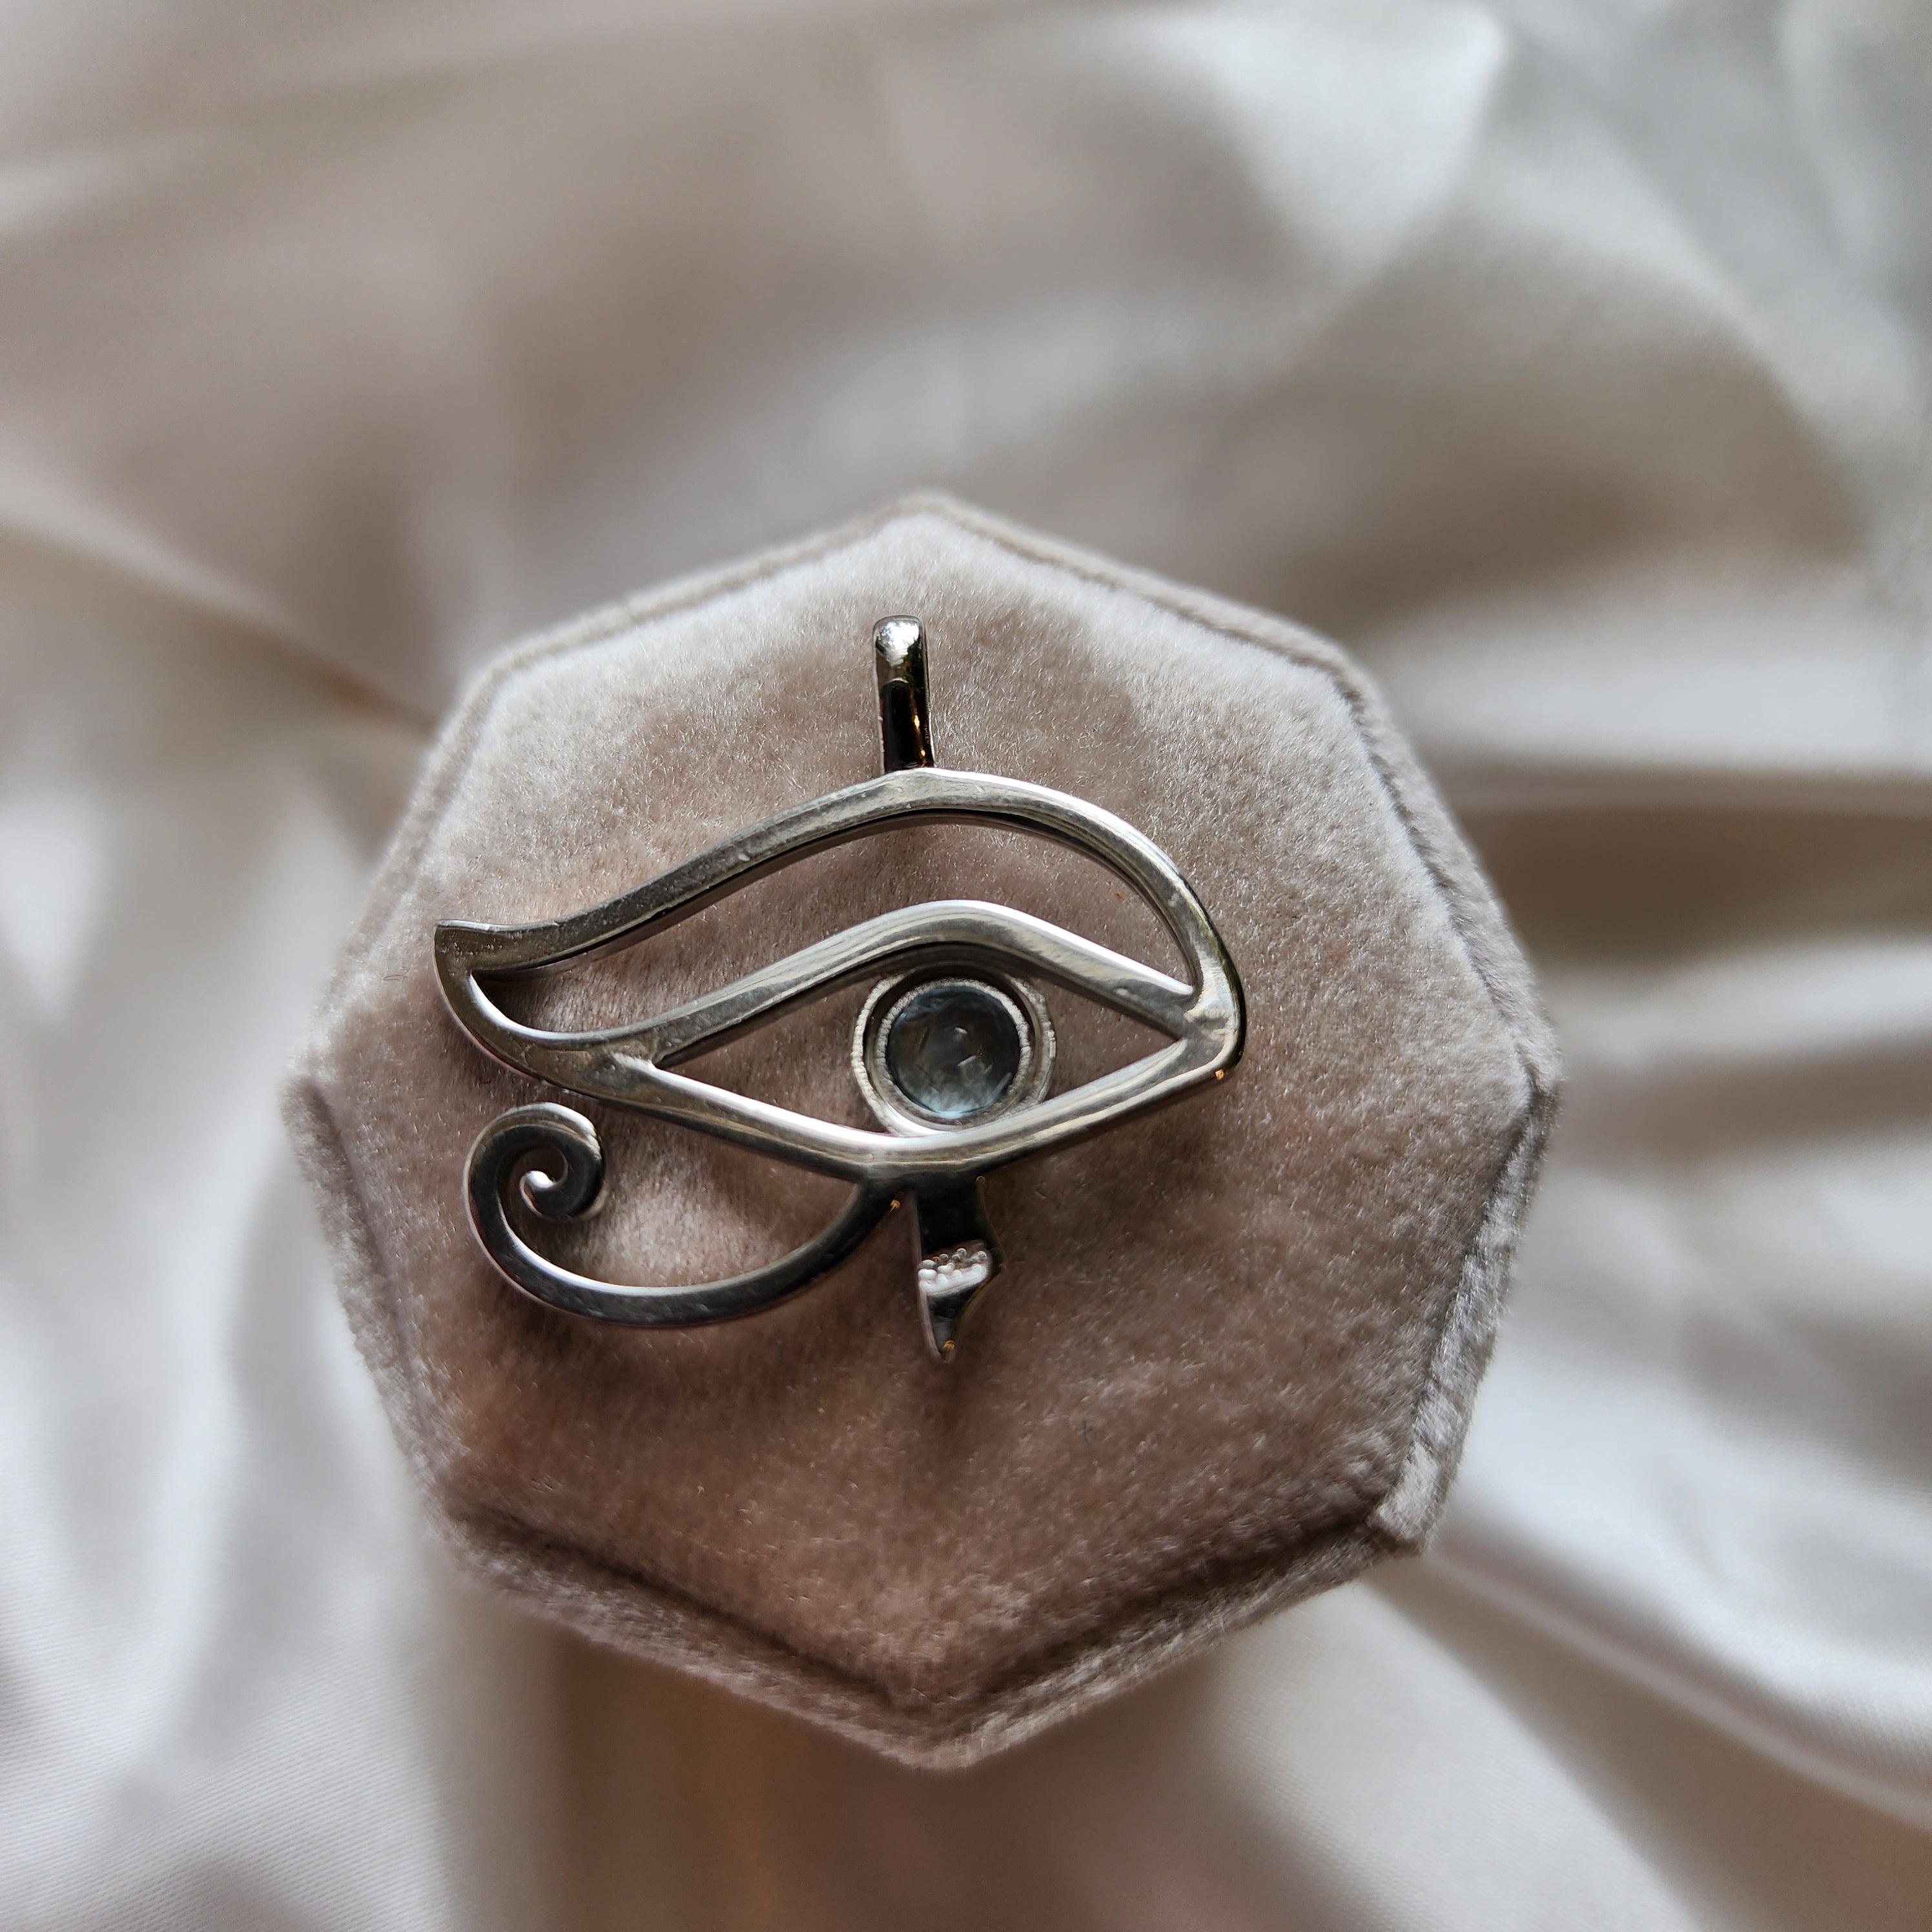 Aquamarine Eye of Horus Amulet Pendant .925 Silver for Health, Protection, and Communication